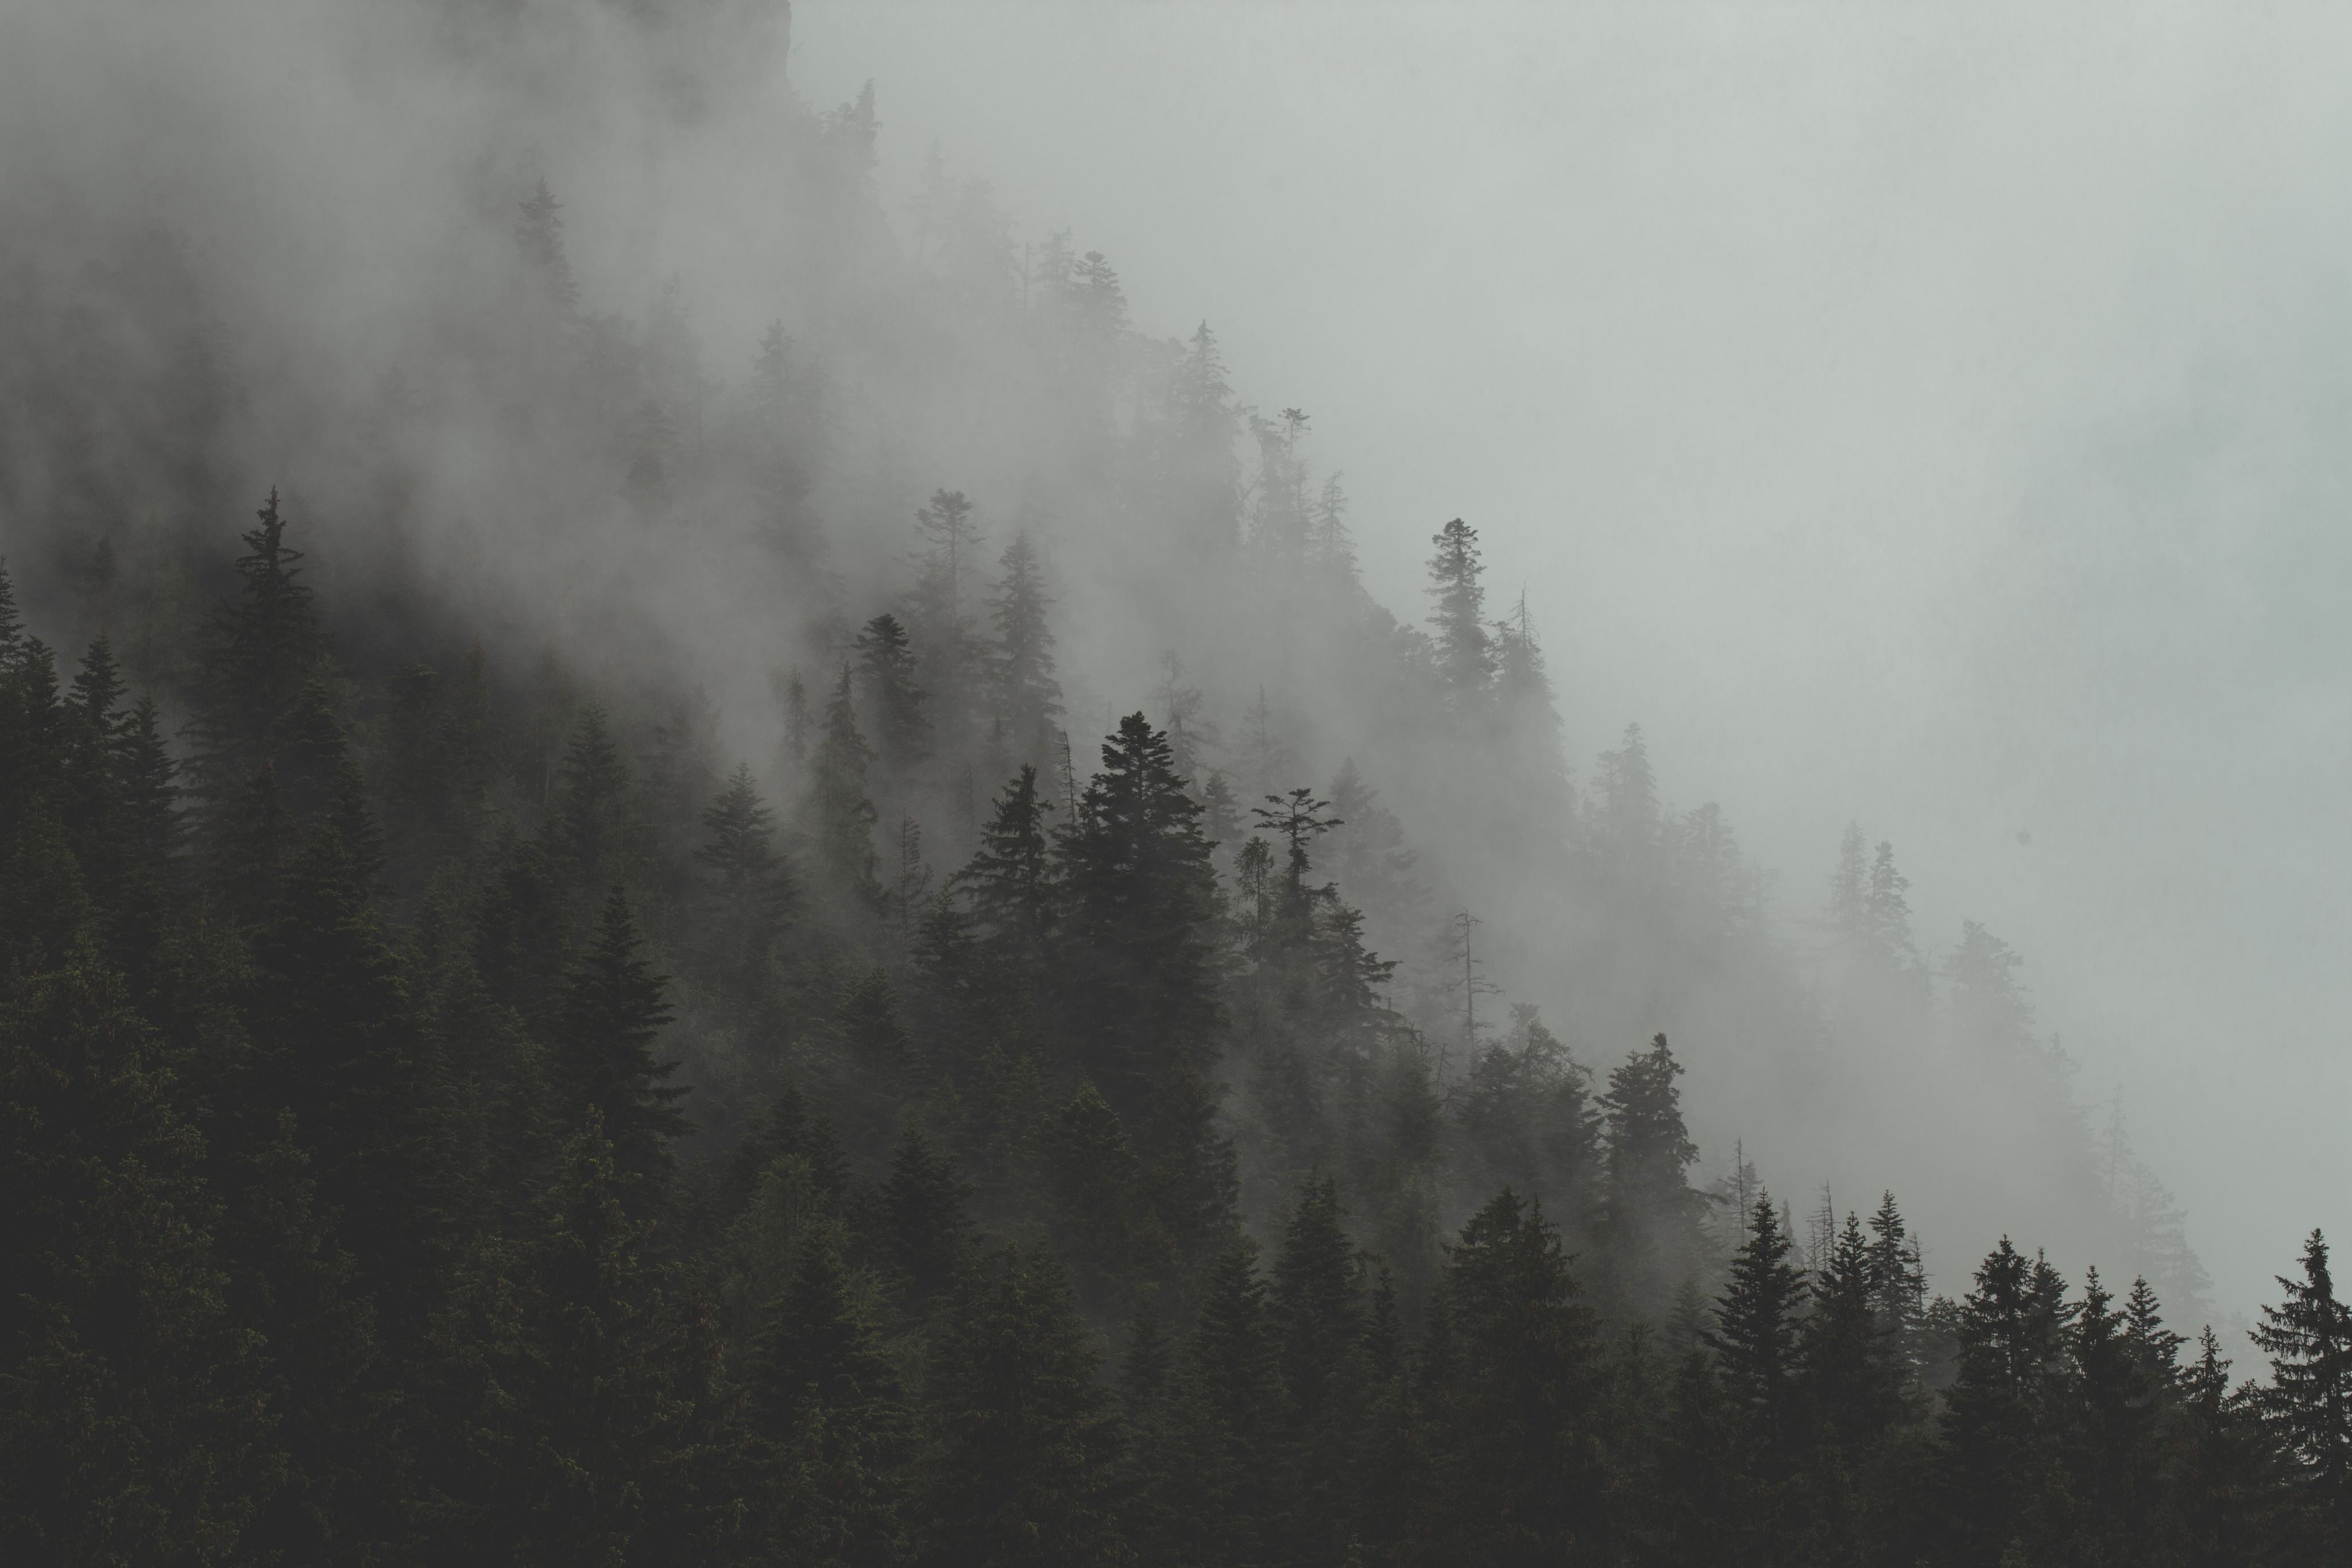 fog-rolls-through-forest-hillside.jpg